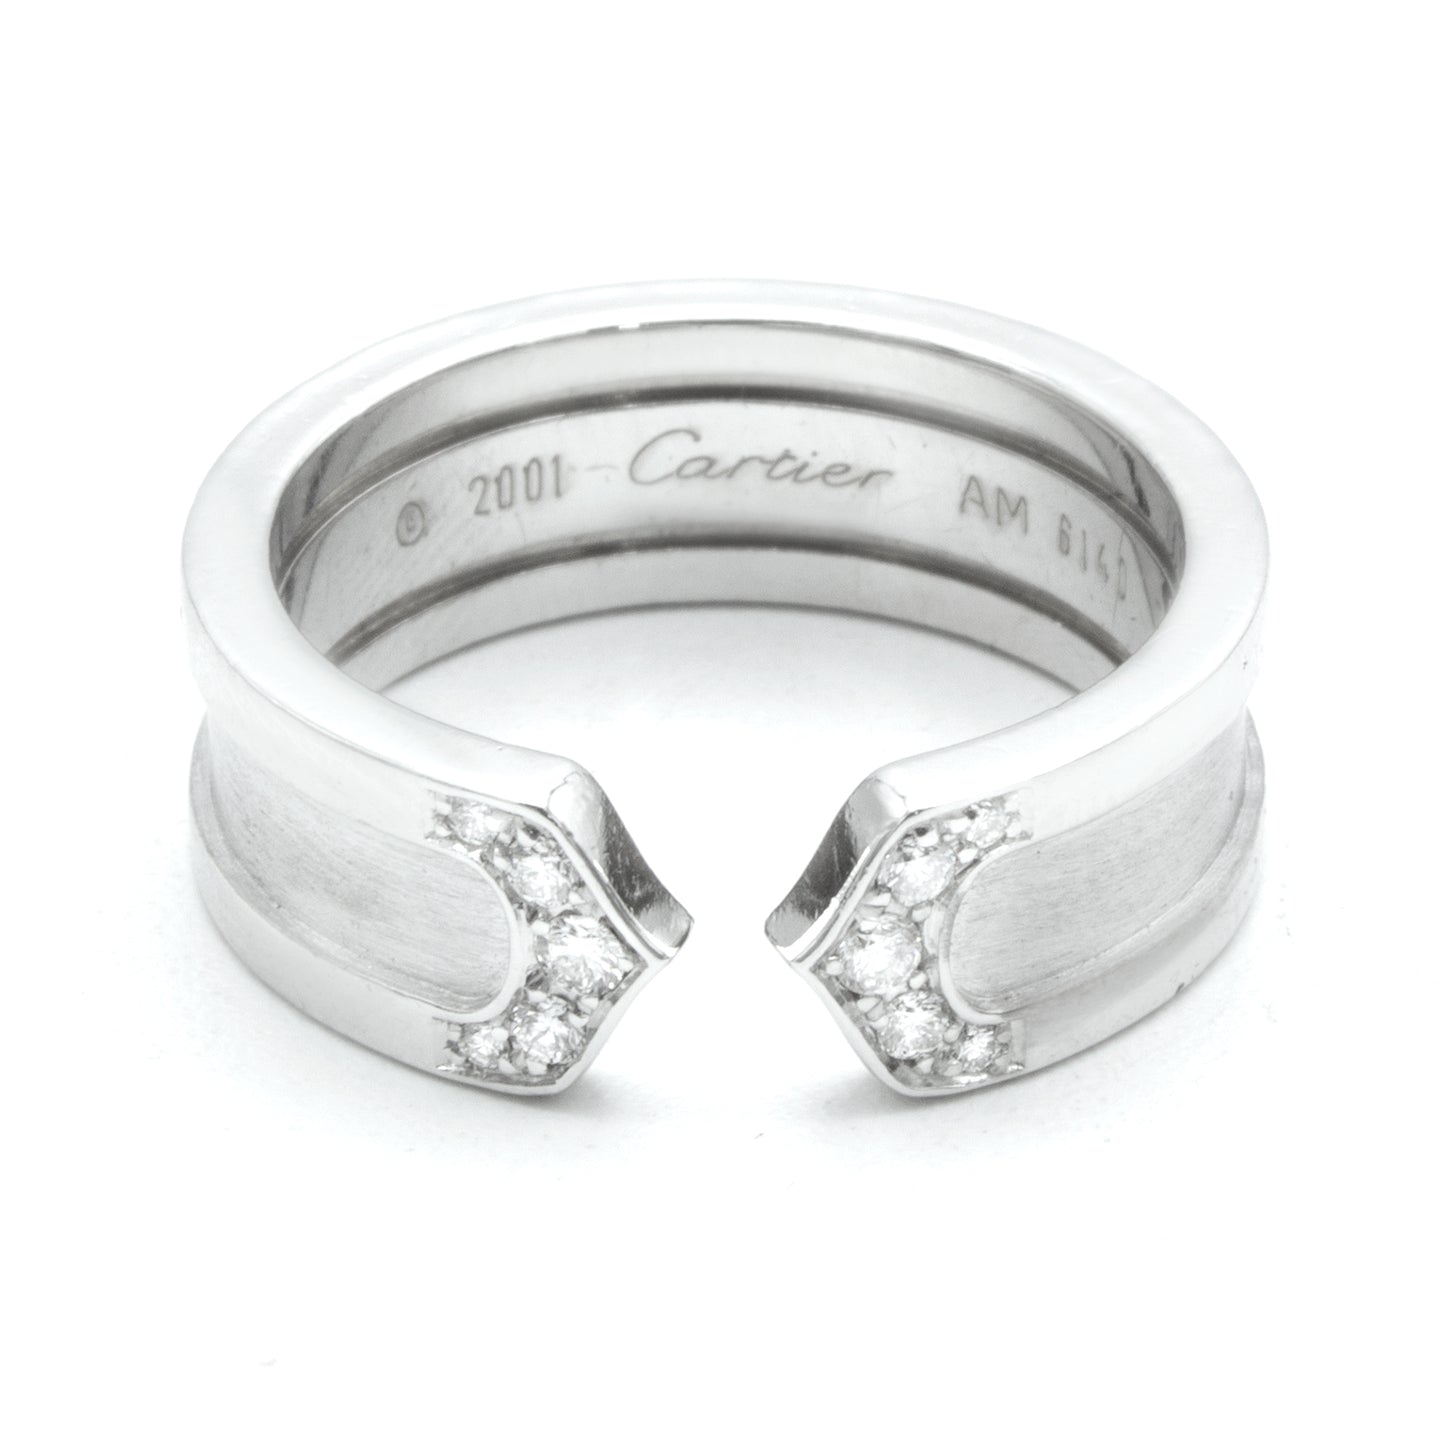 Cartier "C de Cartier" ring Sz 51